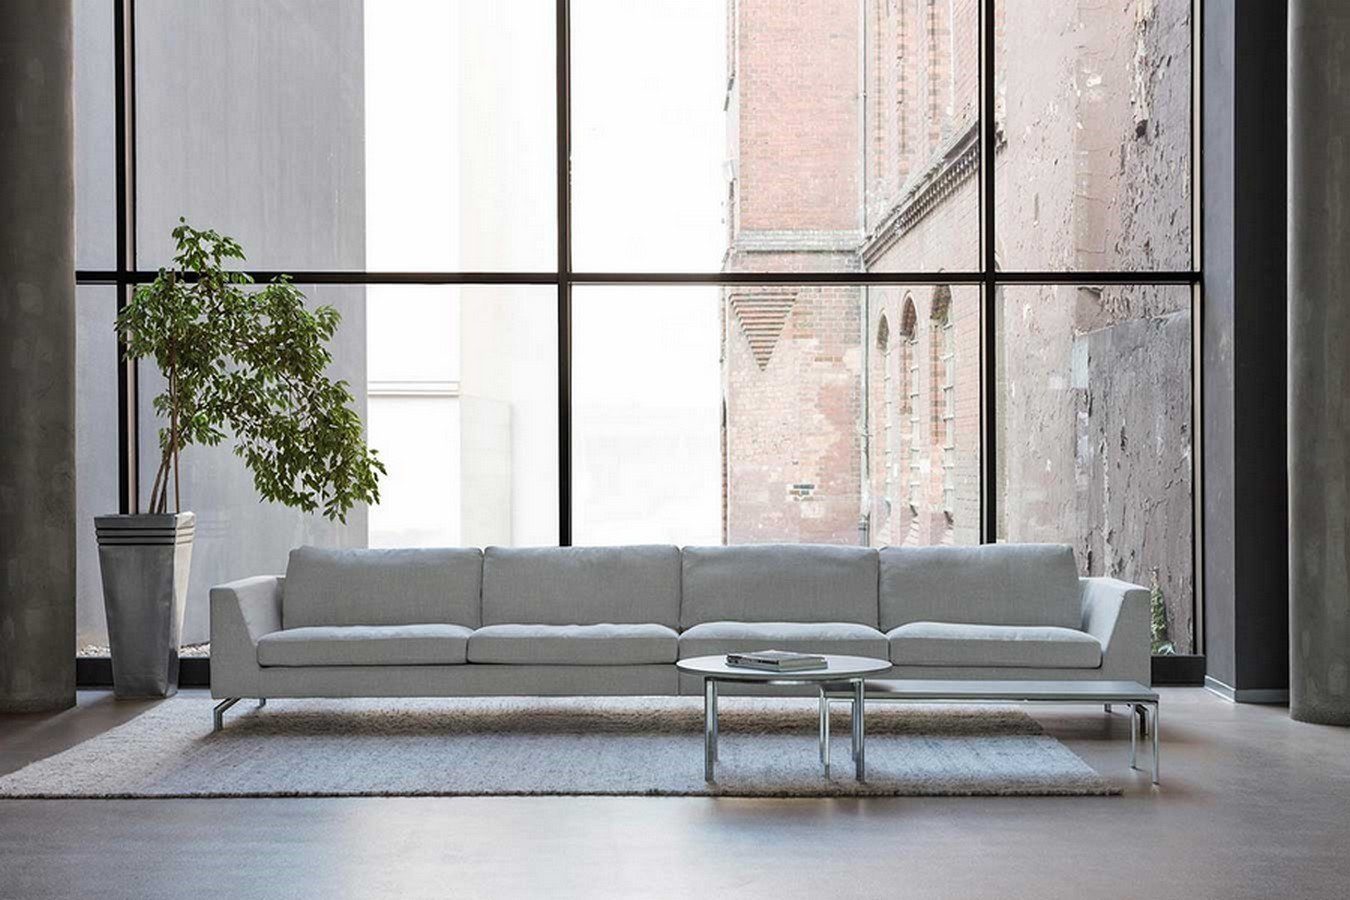 Big-Sofa daslagerhaus 2 Sitzer braun Premium Ledersofa living Oslo